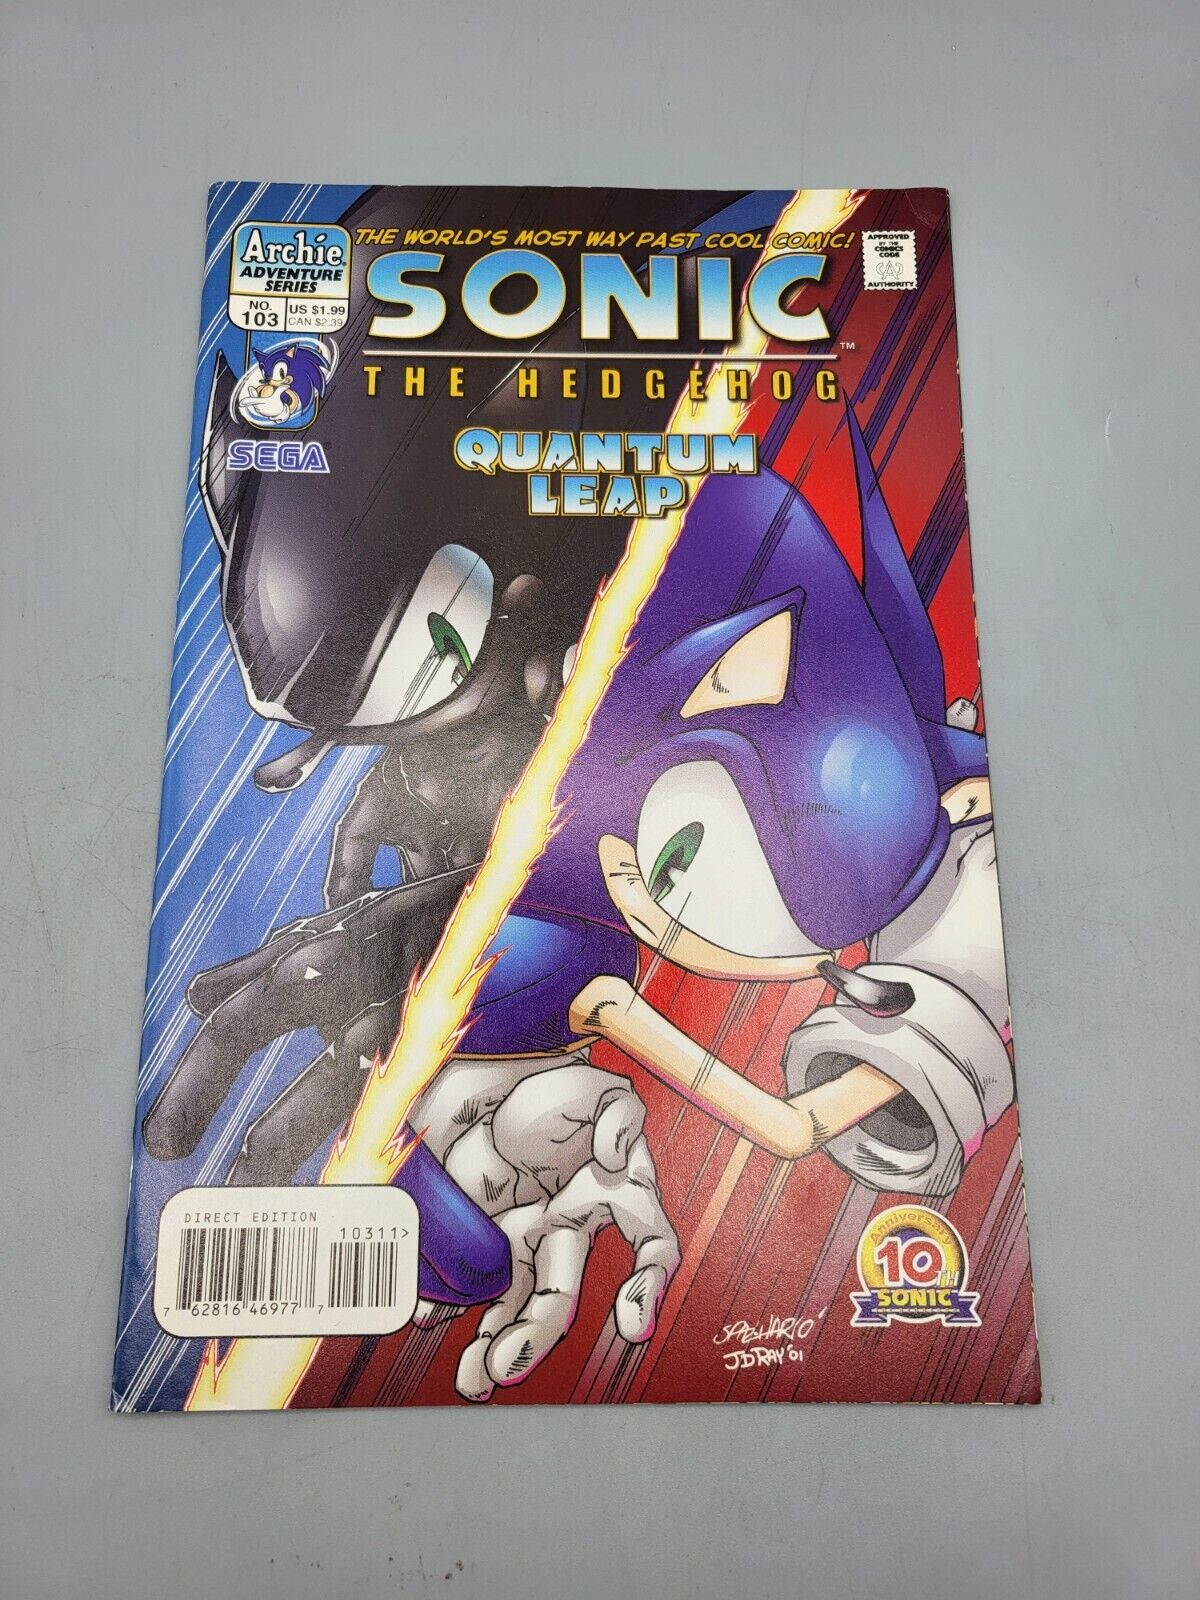 Sonic the Hedgehog #103 Oct 2001 Quantum Leap Direct Edition Archie Comic Book